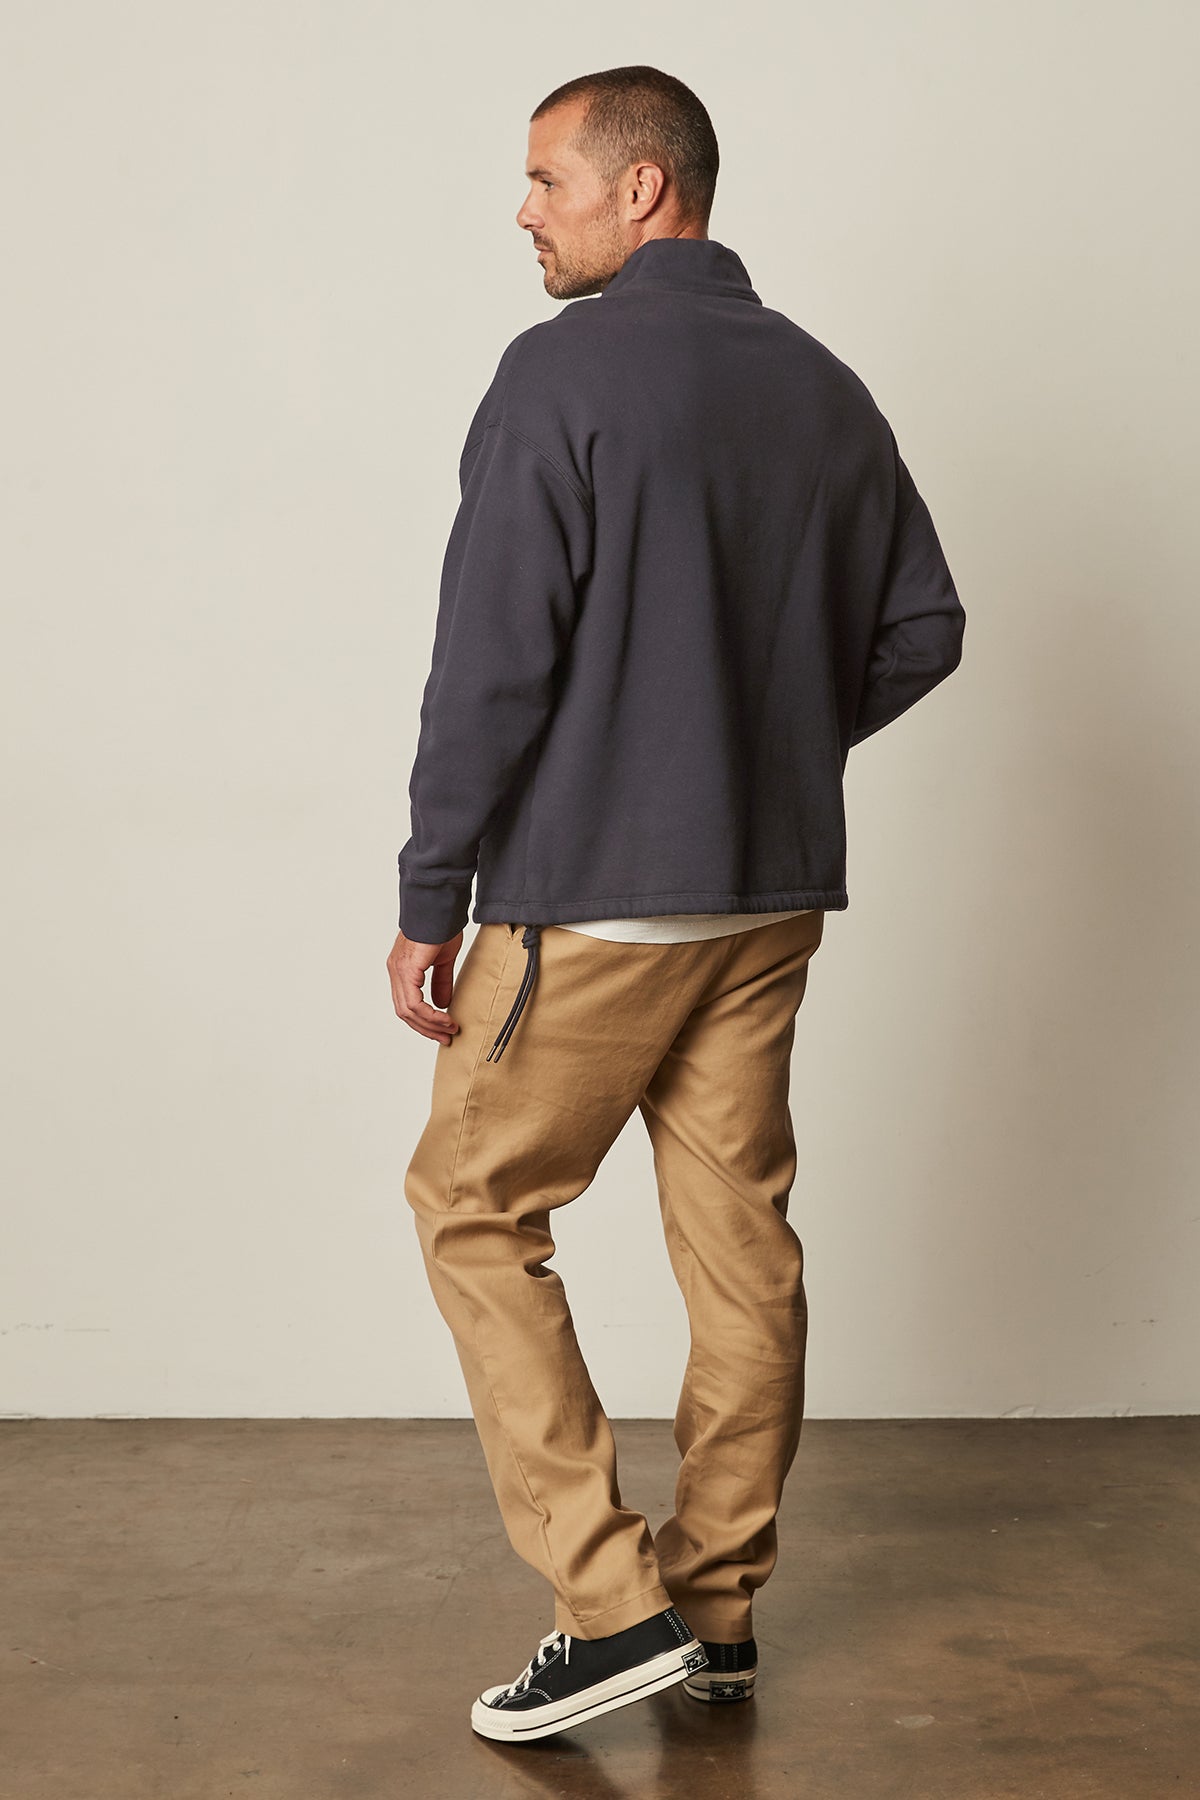 Baldwin Quarter-Zip Sweatshirt in ink front with khaki Aiden pants and Converse full length back-25382490407105